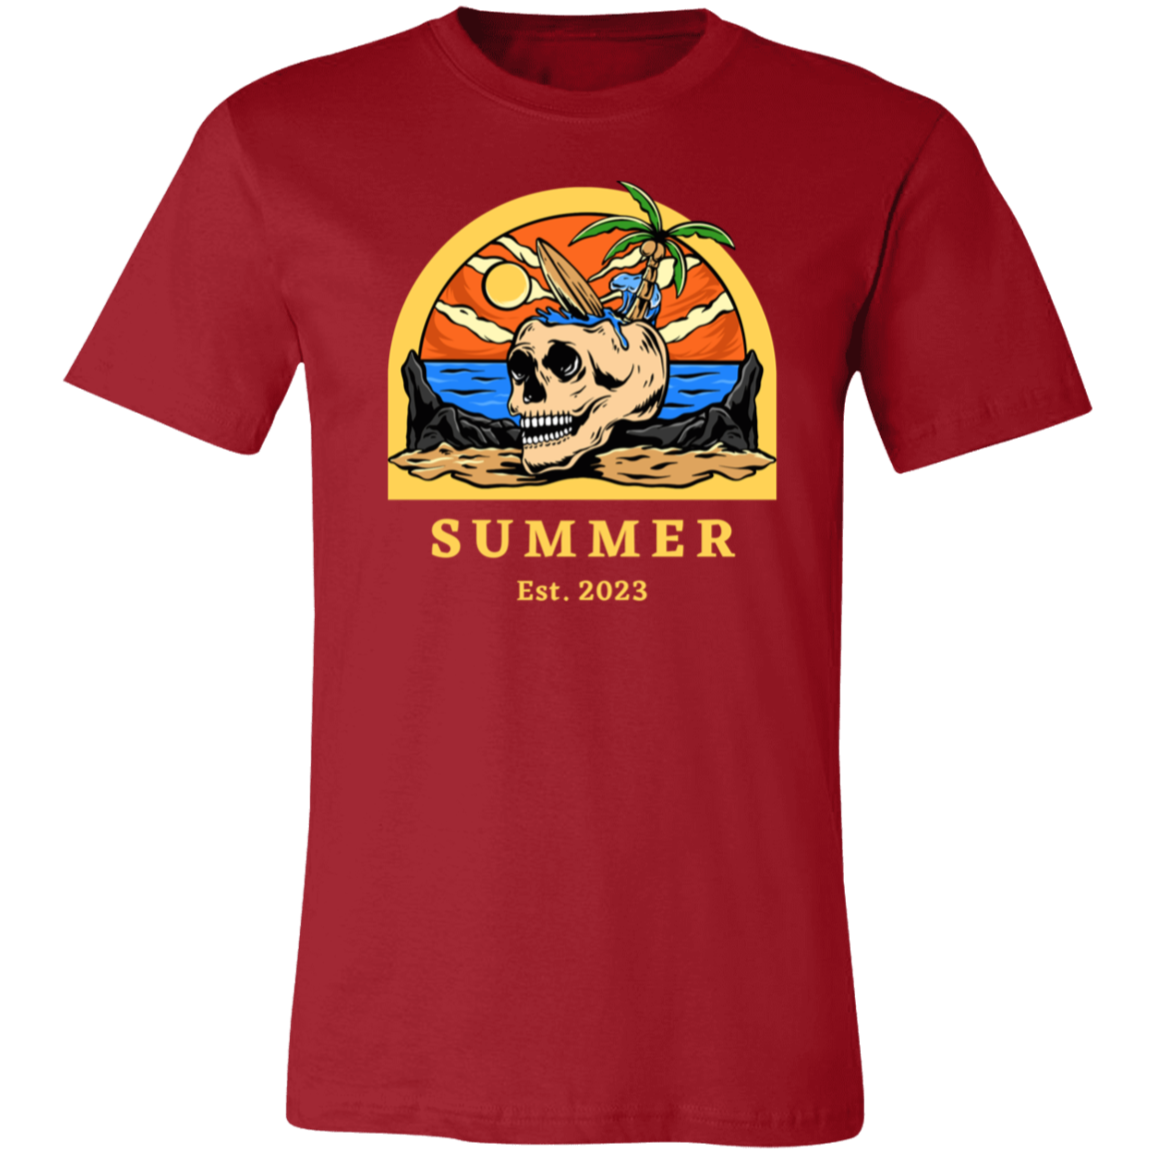 Sunset Skeleton Beach Shirt